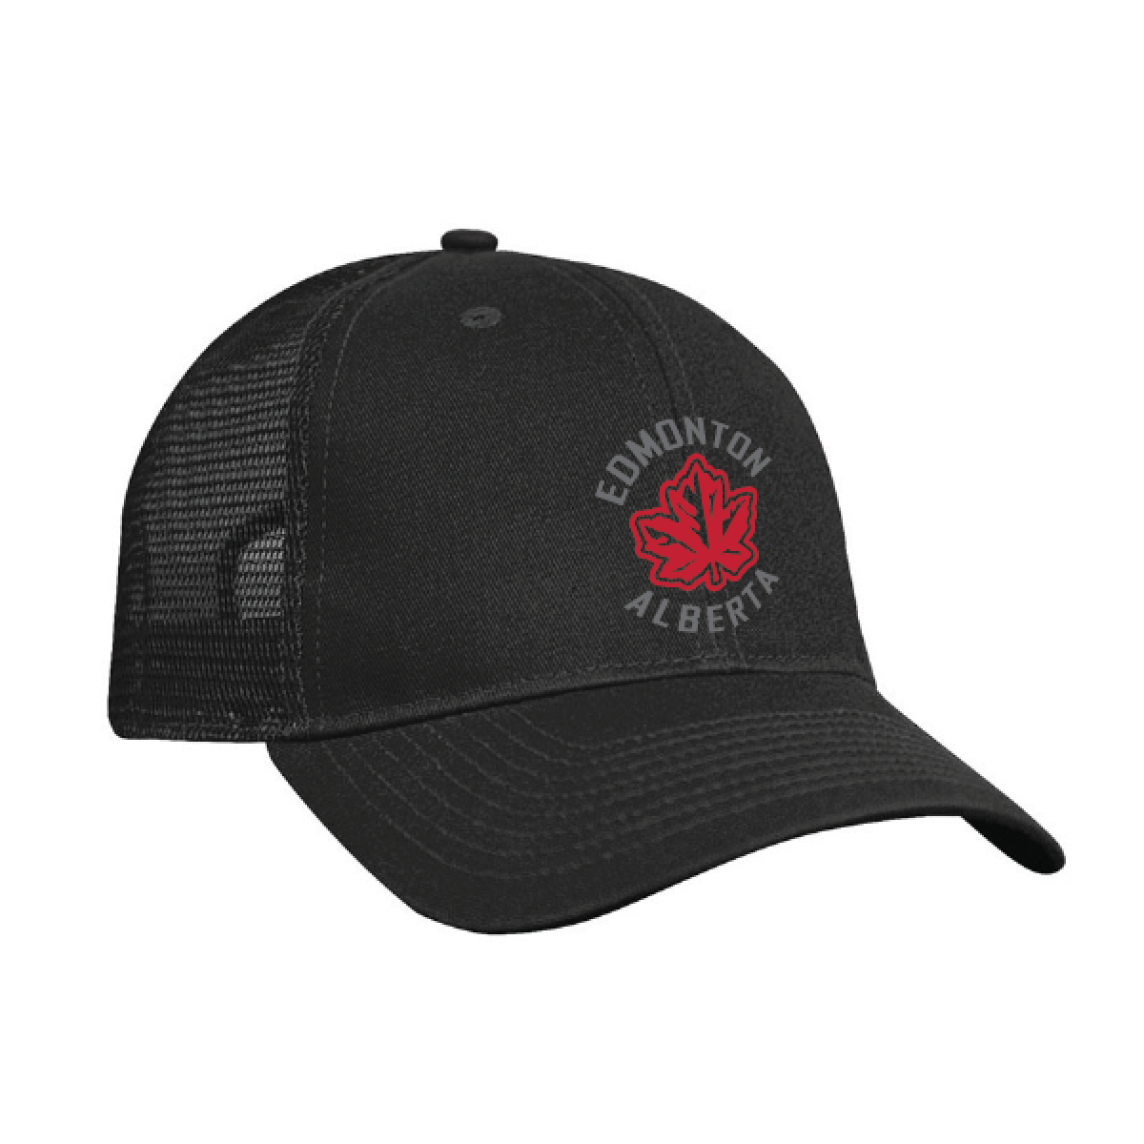 Embroidered OCG Edmonton Maple Leaf Alberta Truckers Cap in Black